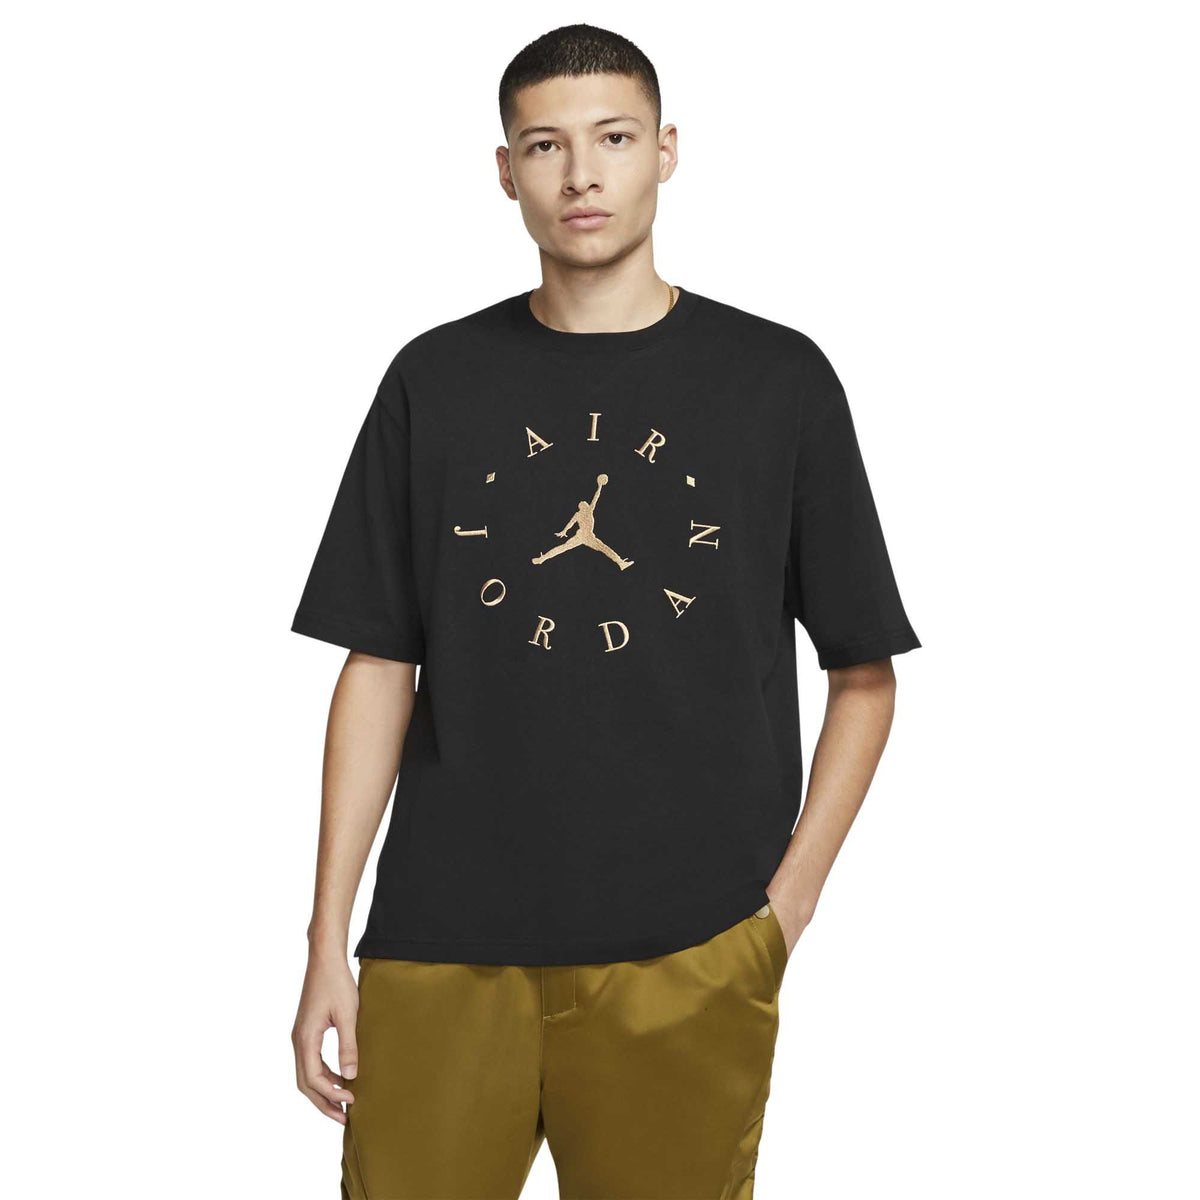 Jordan Graphic T-shirt